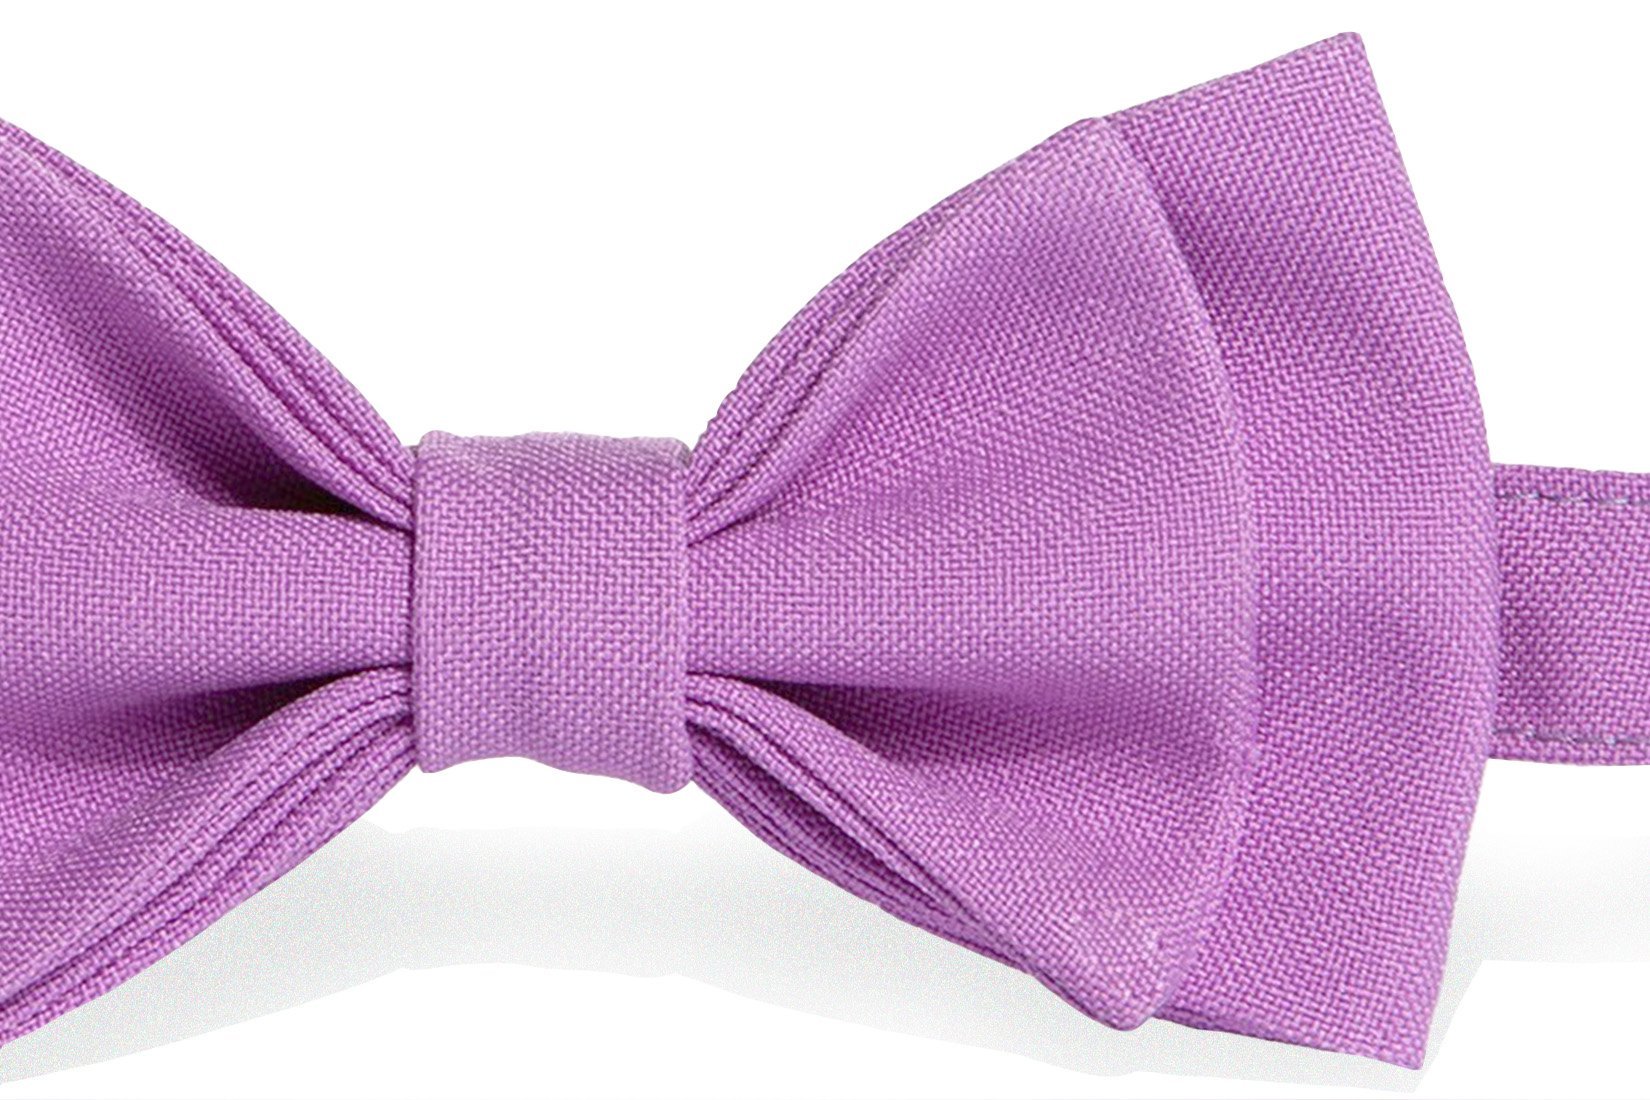 Lilac Bow Tie